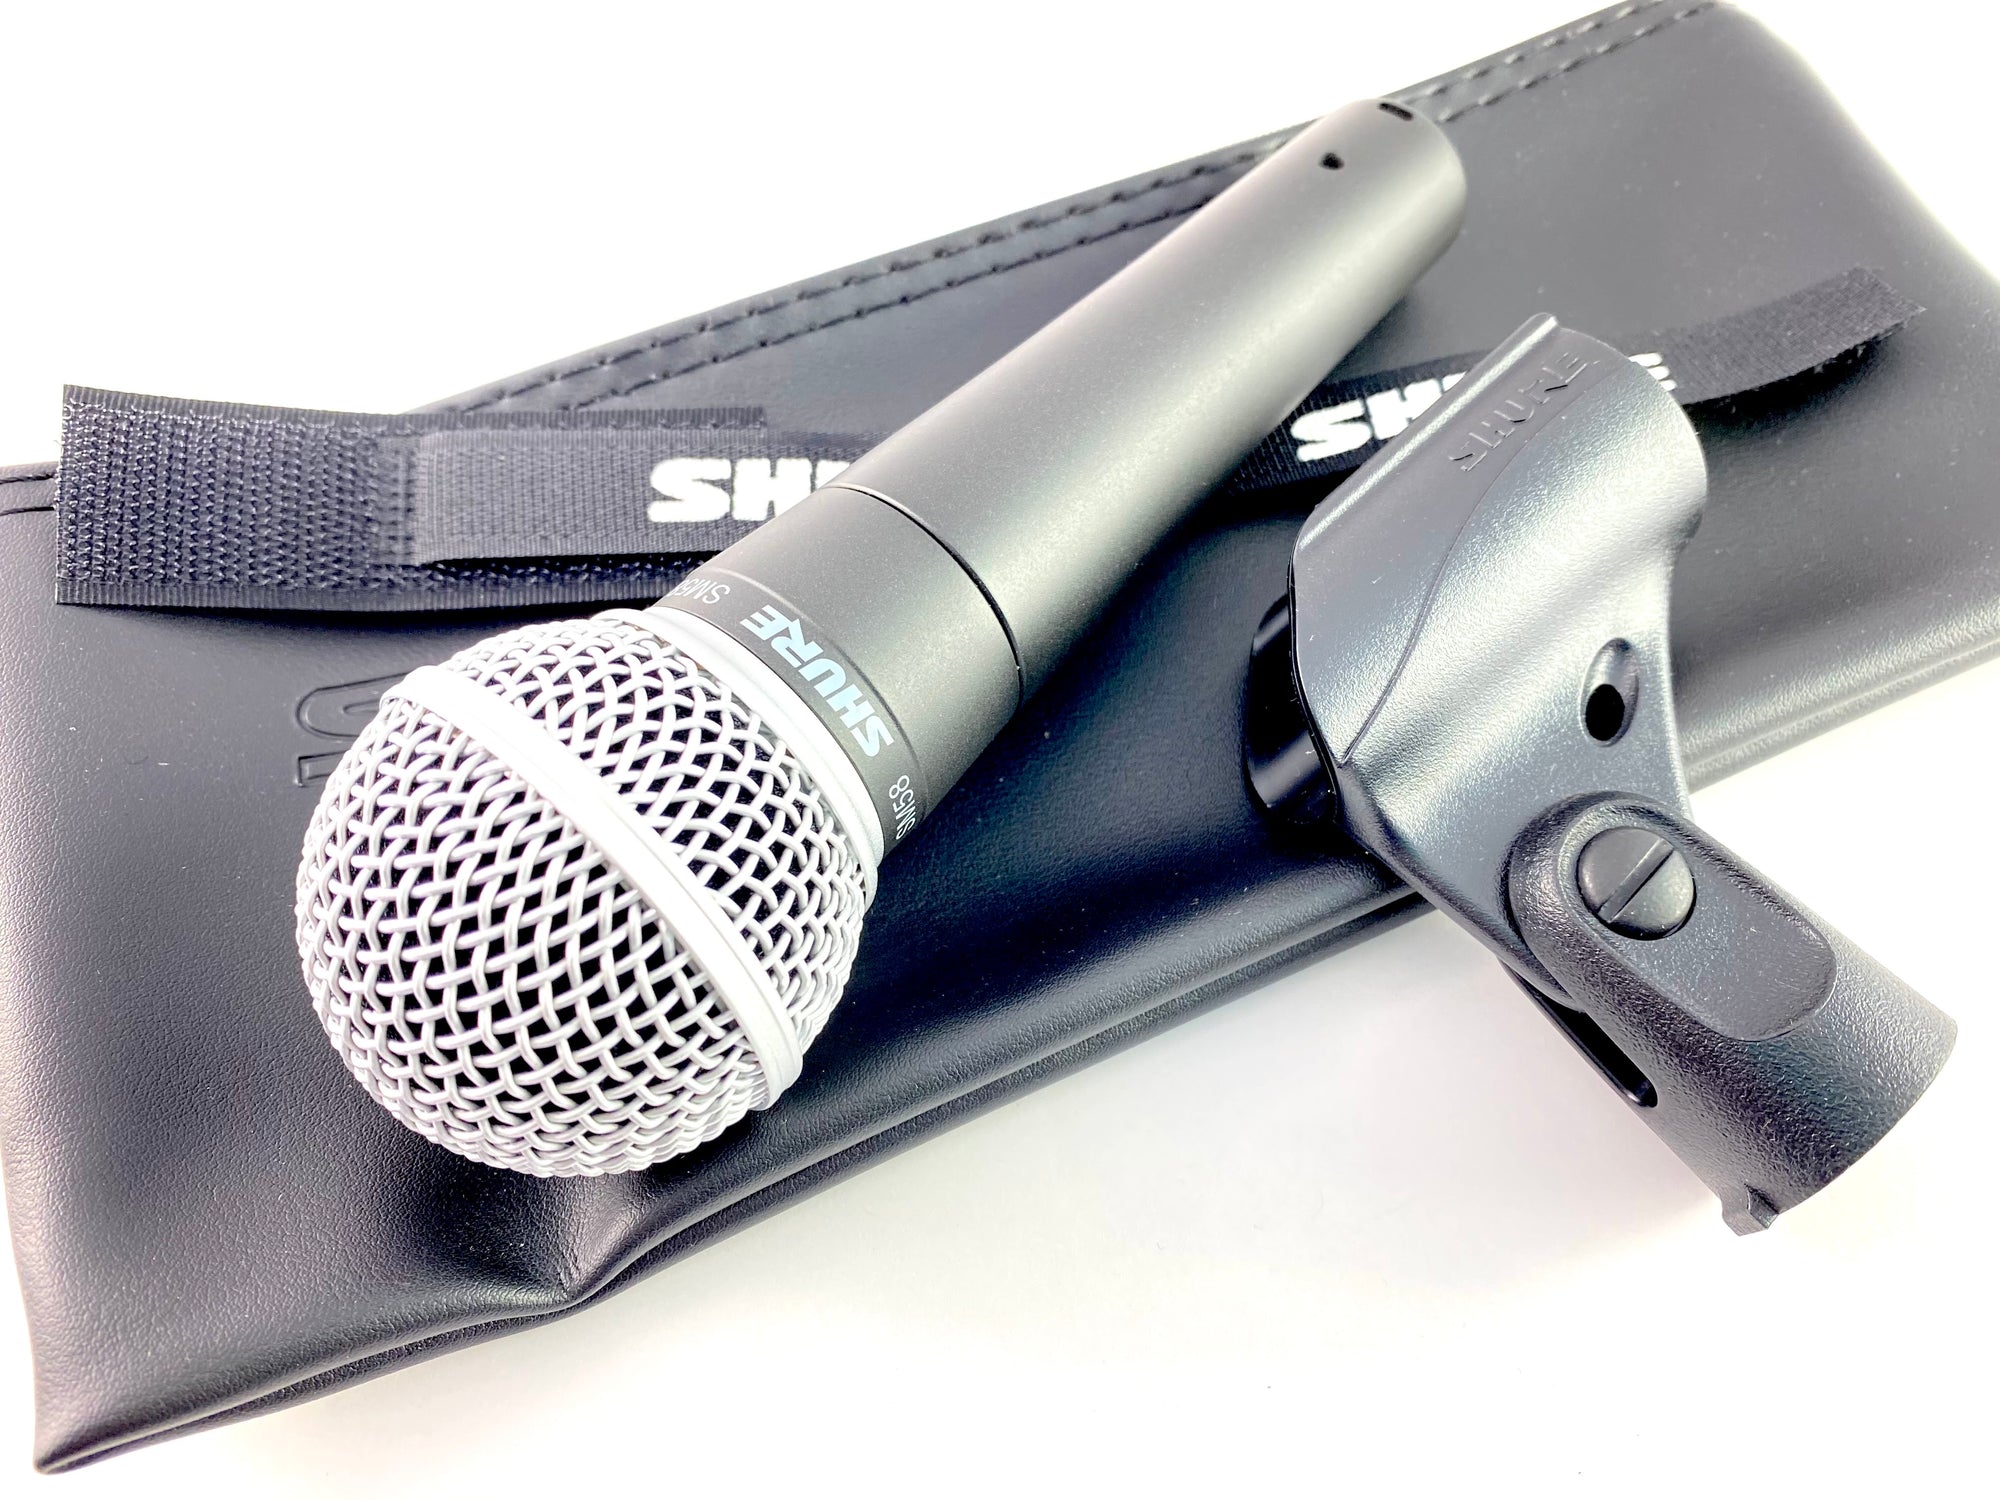 Shure SM58-LC Cardioid Dynamic Microphone SM58-LC B&H Photo Video